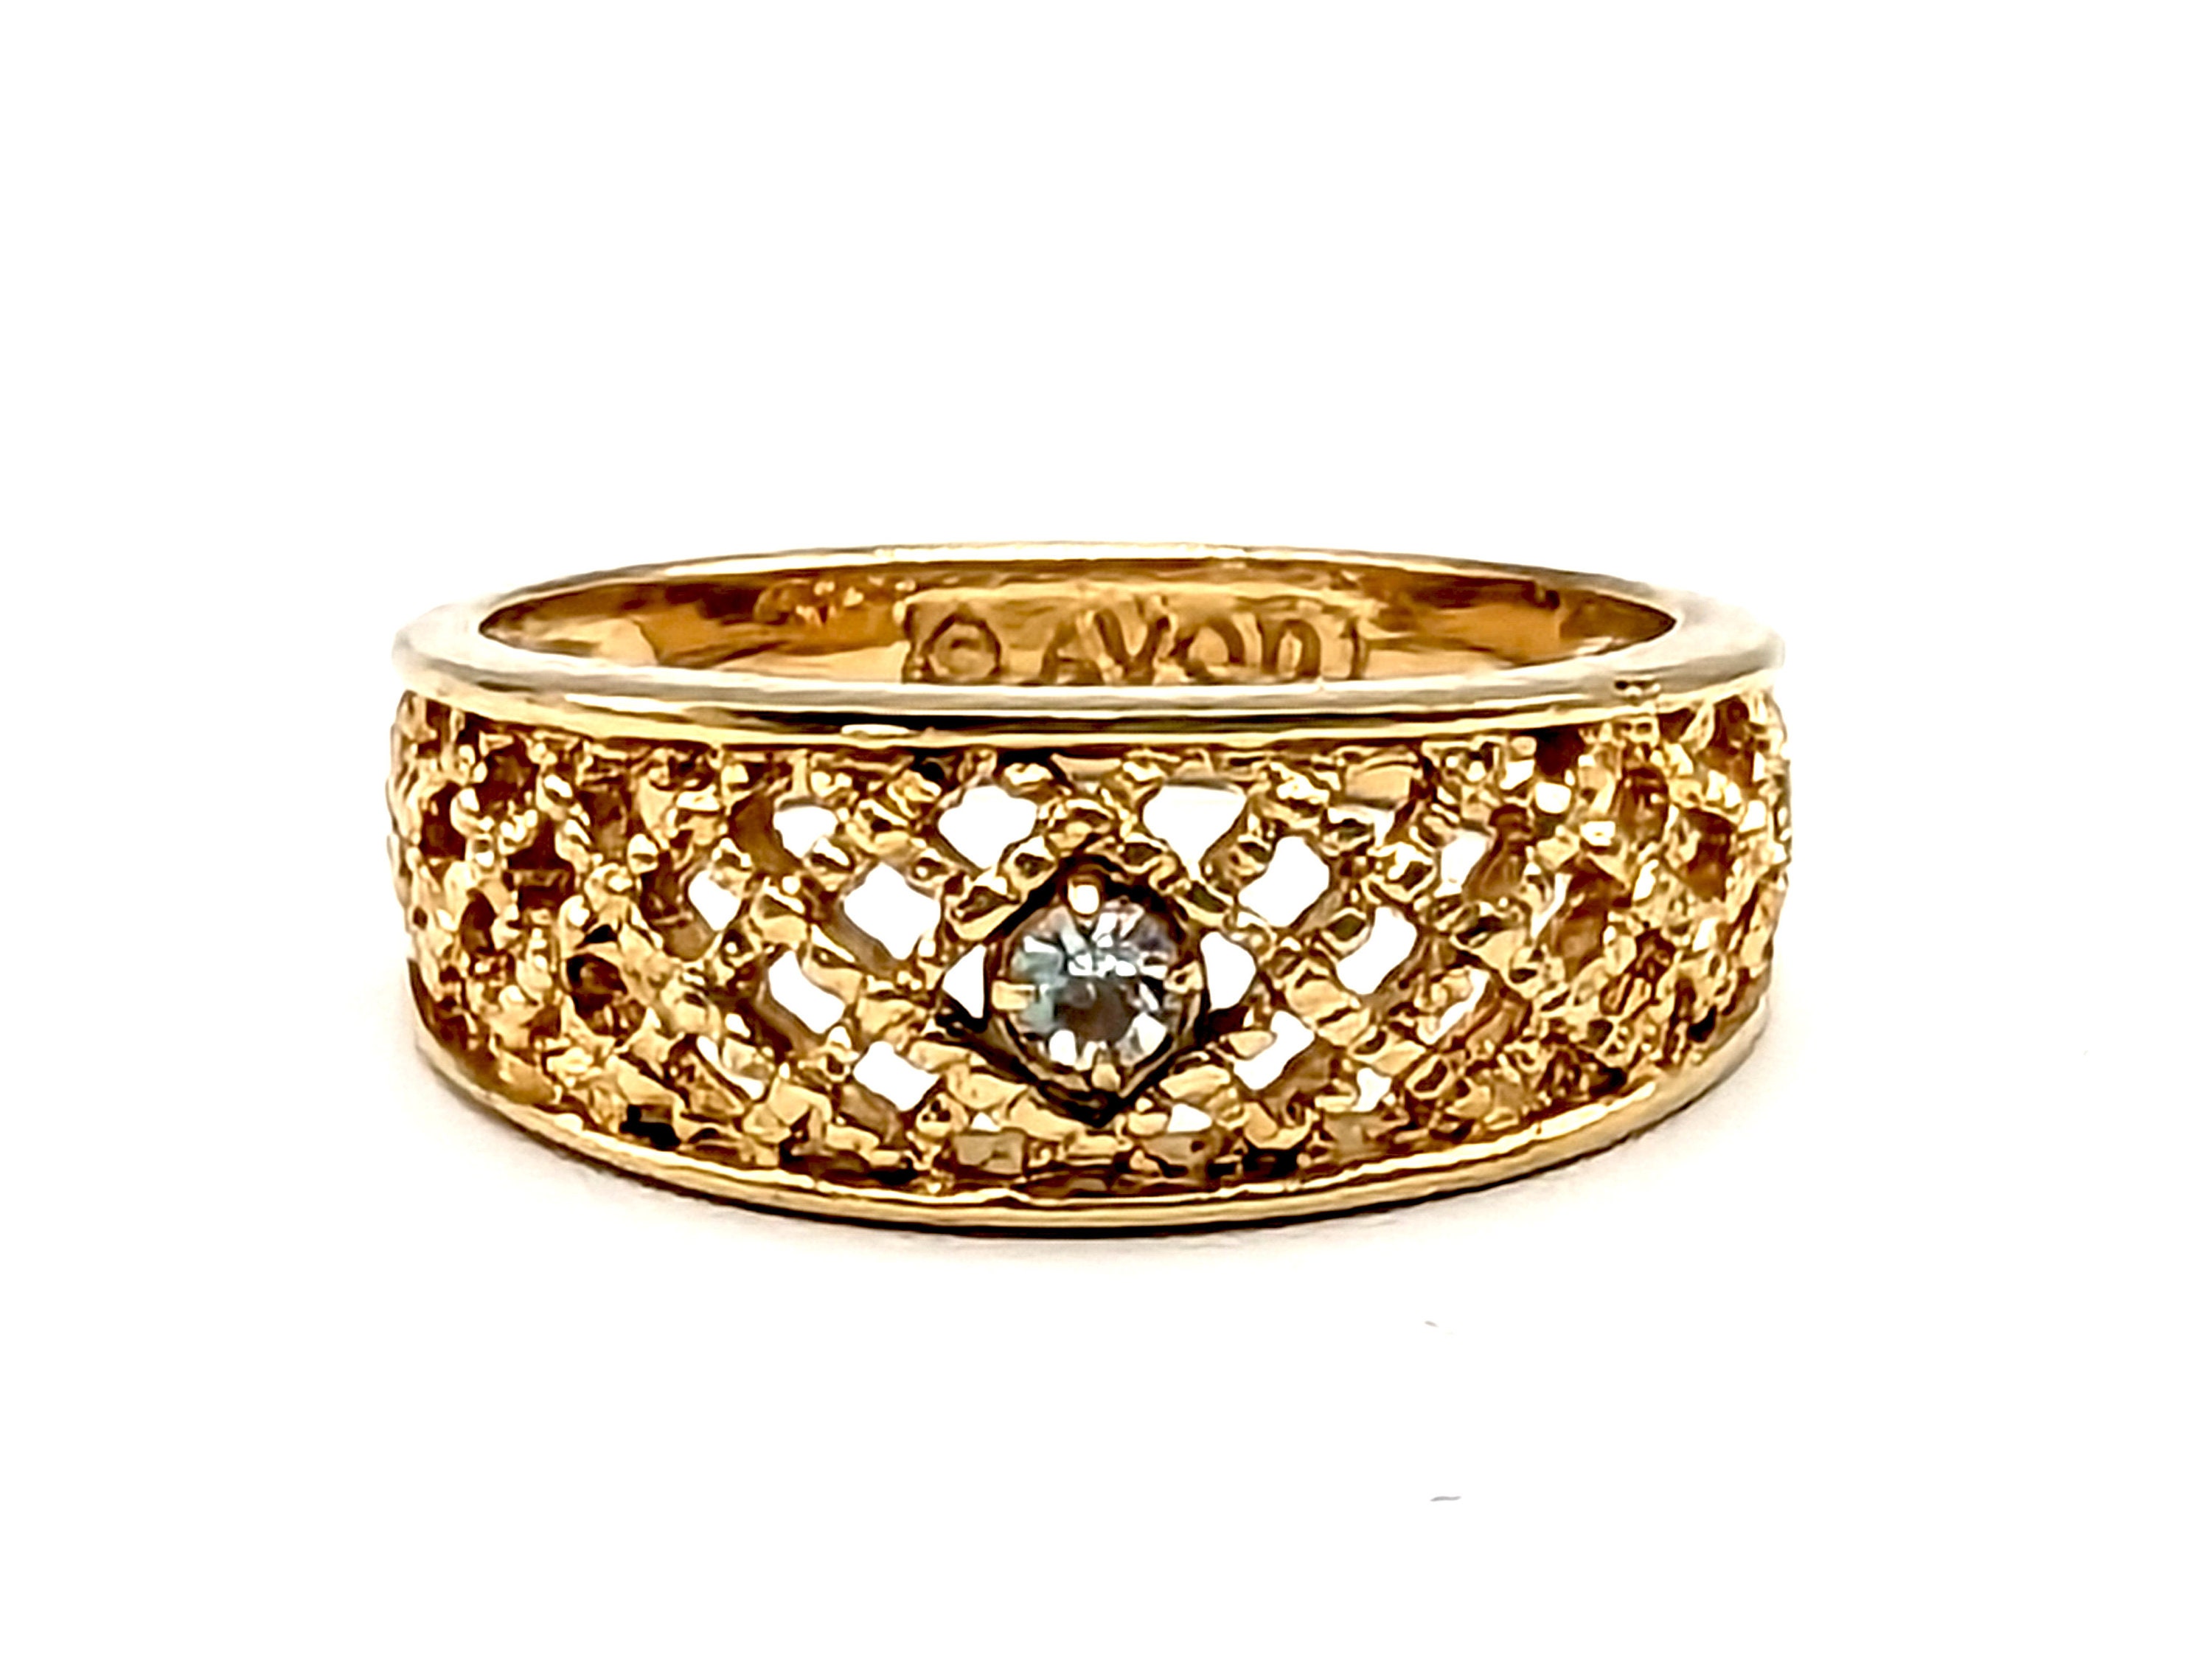 Vintage Avon Ring | Vintage avon, Avon jewelry, Avon rings